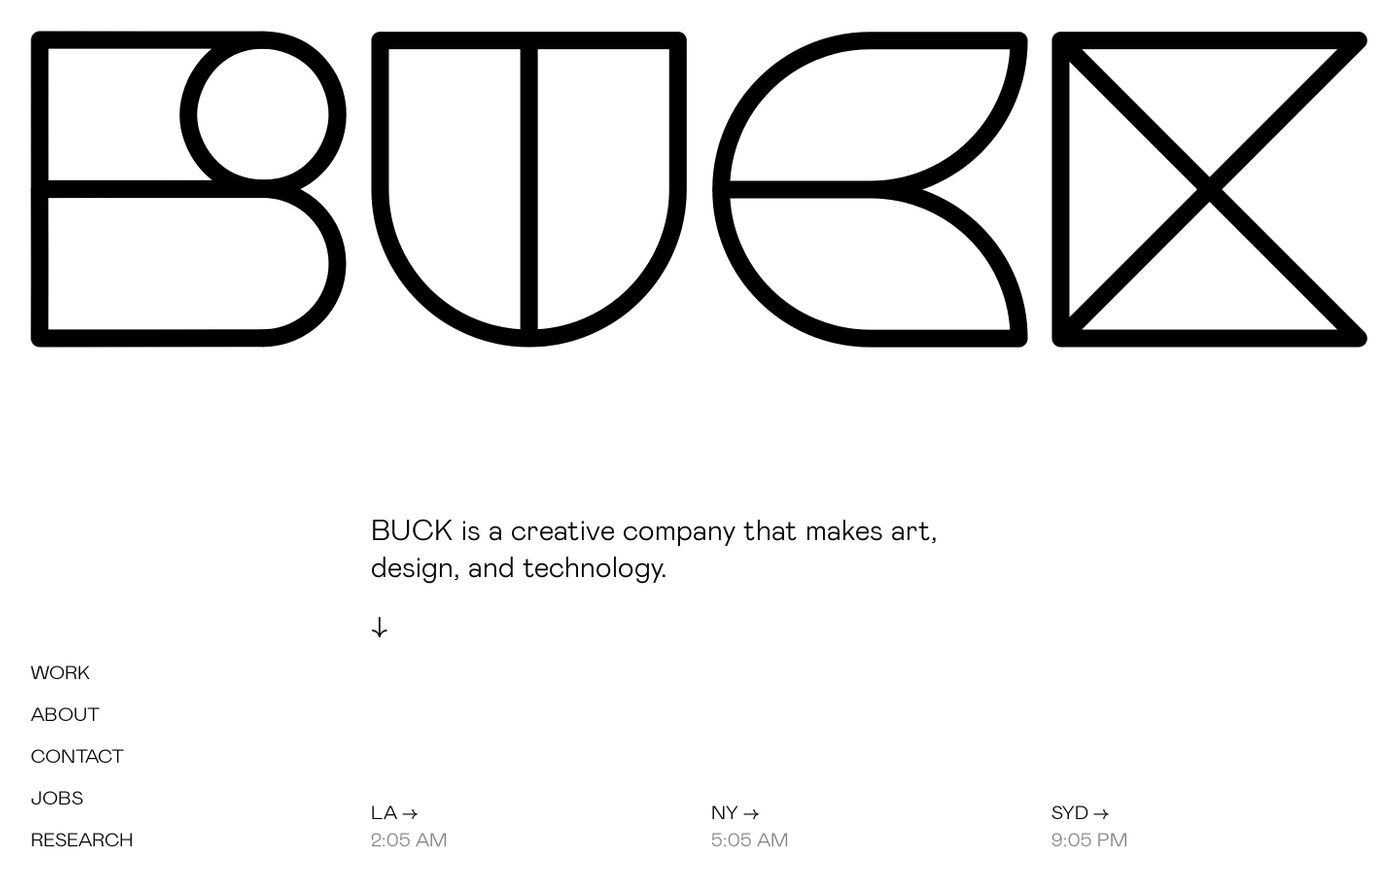 Screenshot of Buck website